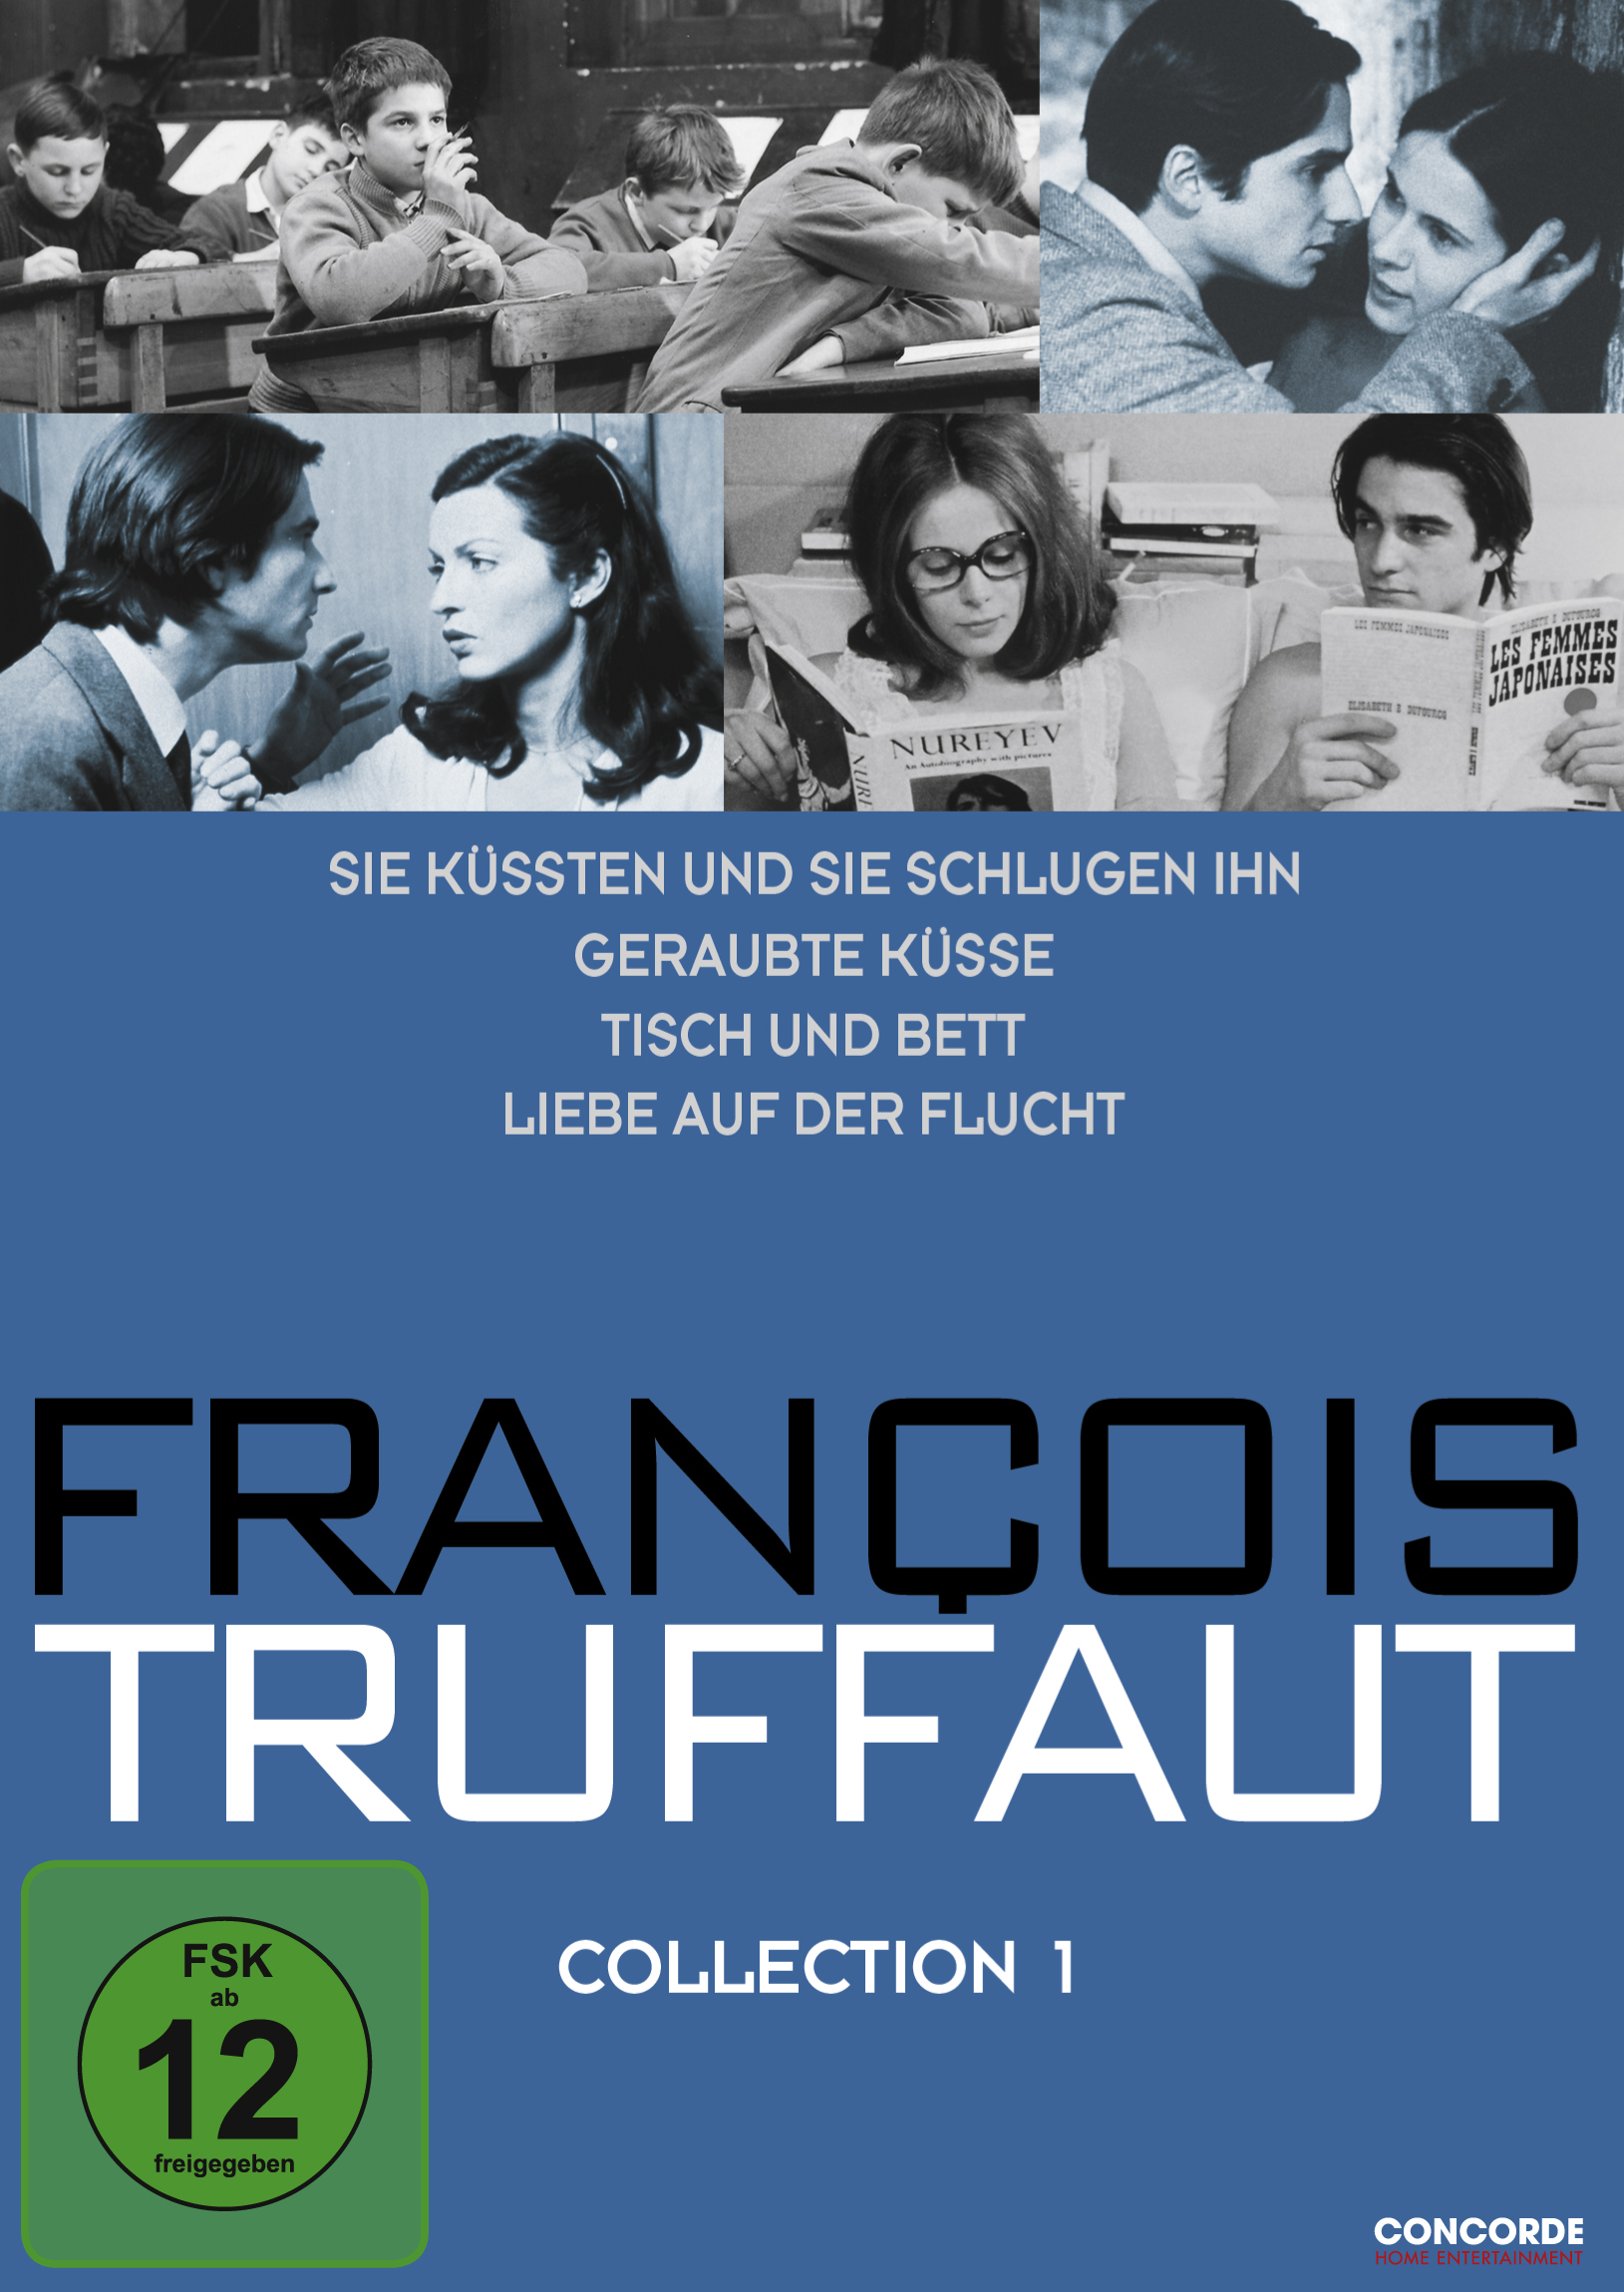 1 Collection Truffaut DVD Francois